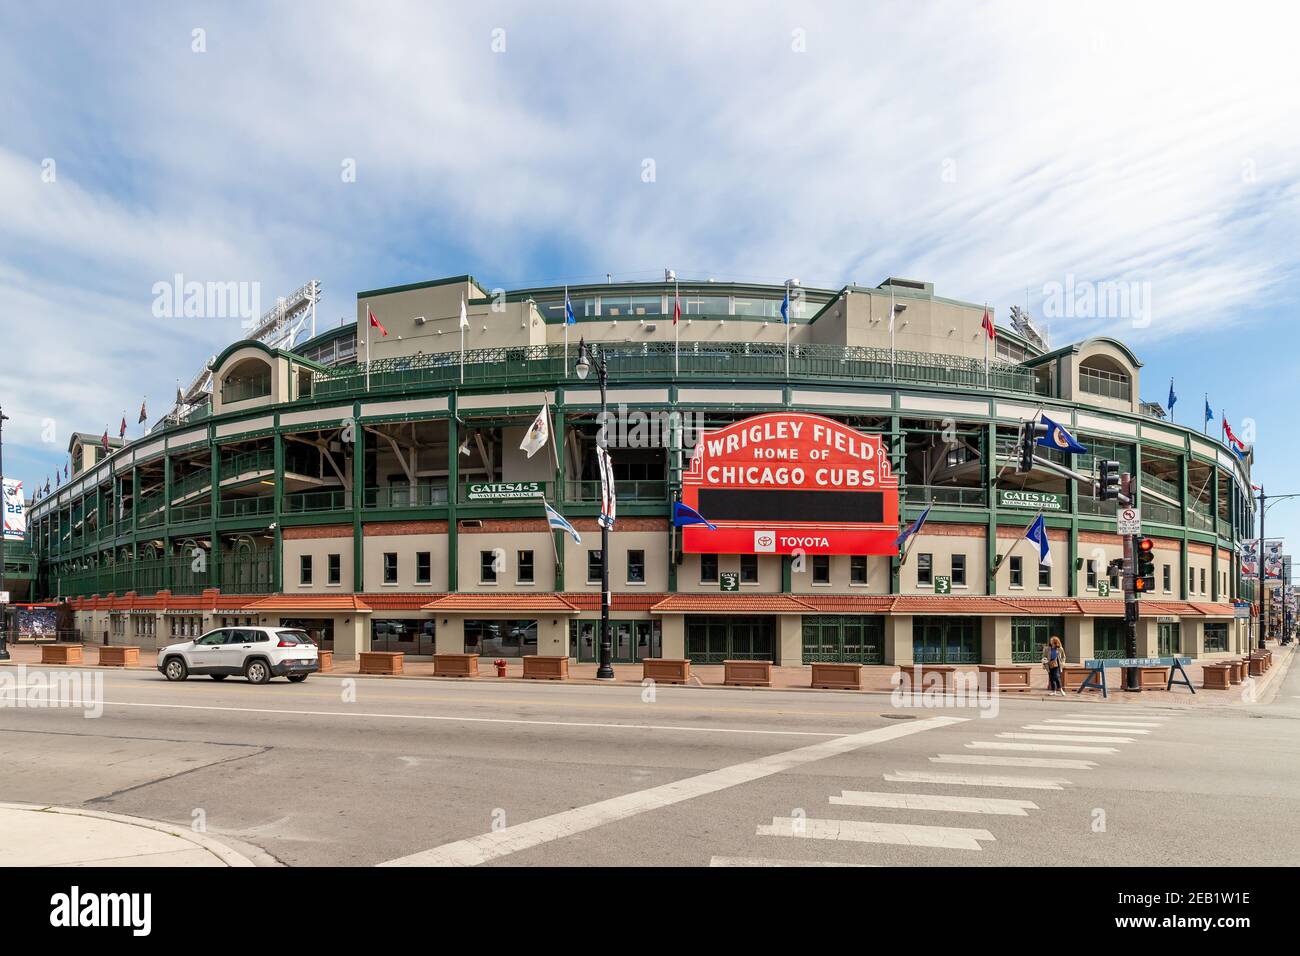 The exterior Major League Baseball's Chicago Cubs' Wrigley Field